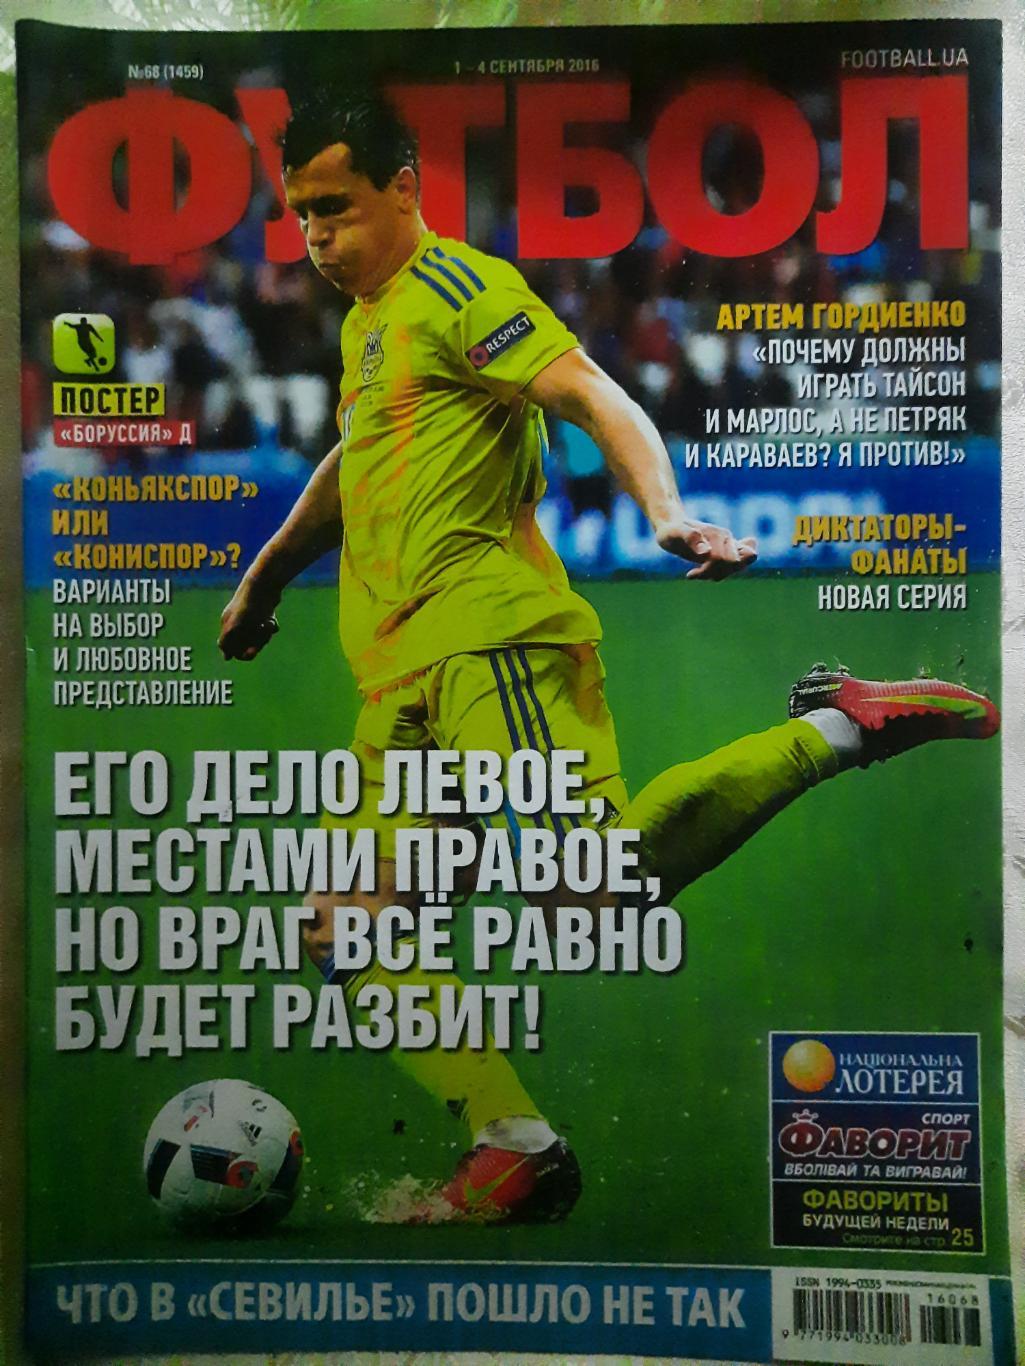 еженедельник Футбол #68 2016, постер: Боруссия Д...